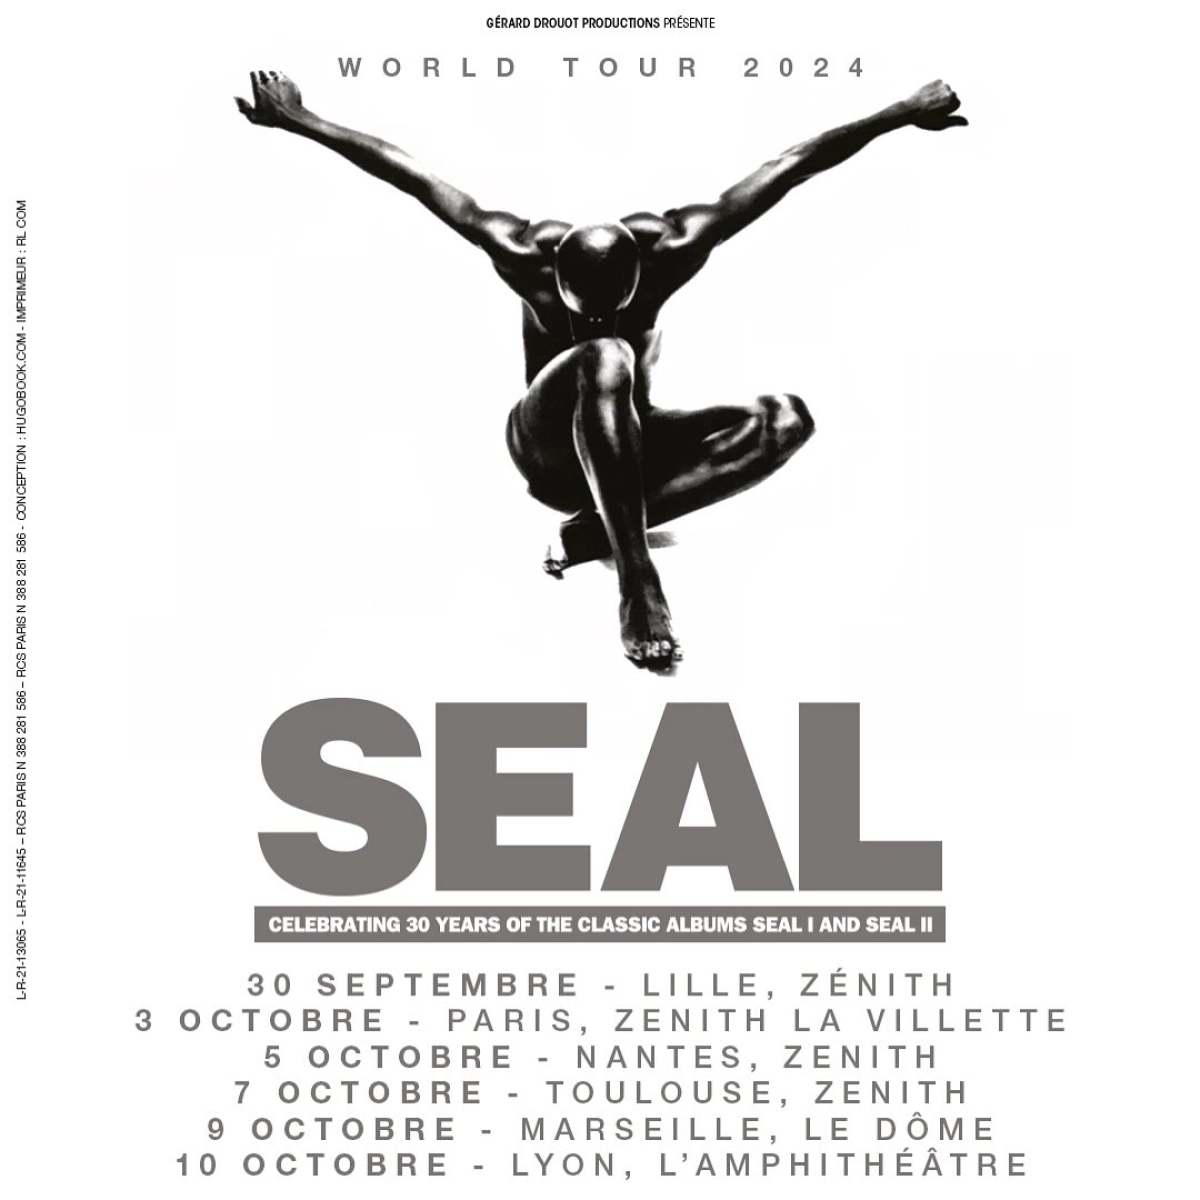 Billets Seal (Zenith Toulouse - Toulouse)